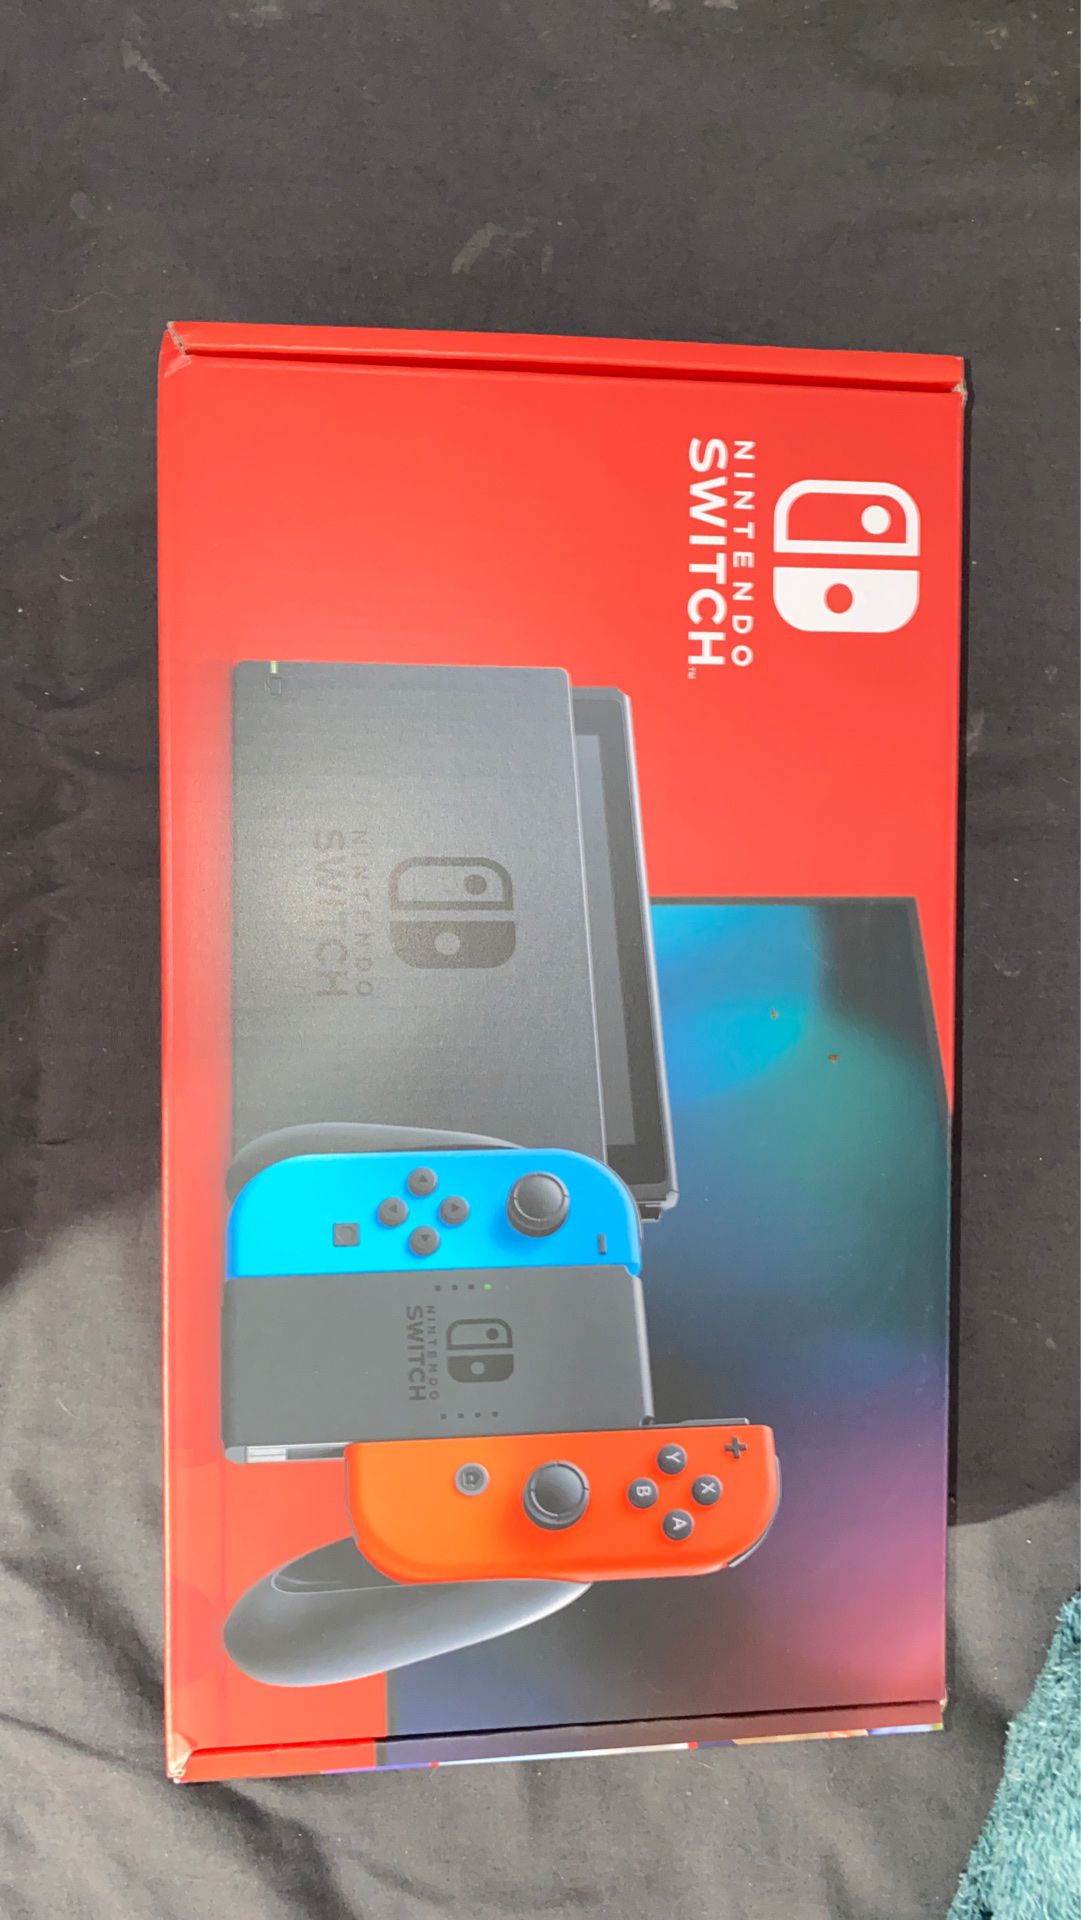 Nintendo Switch, 32GB - Neon Blue& Red Joy Con - BRAND NEW, UNOPENED